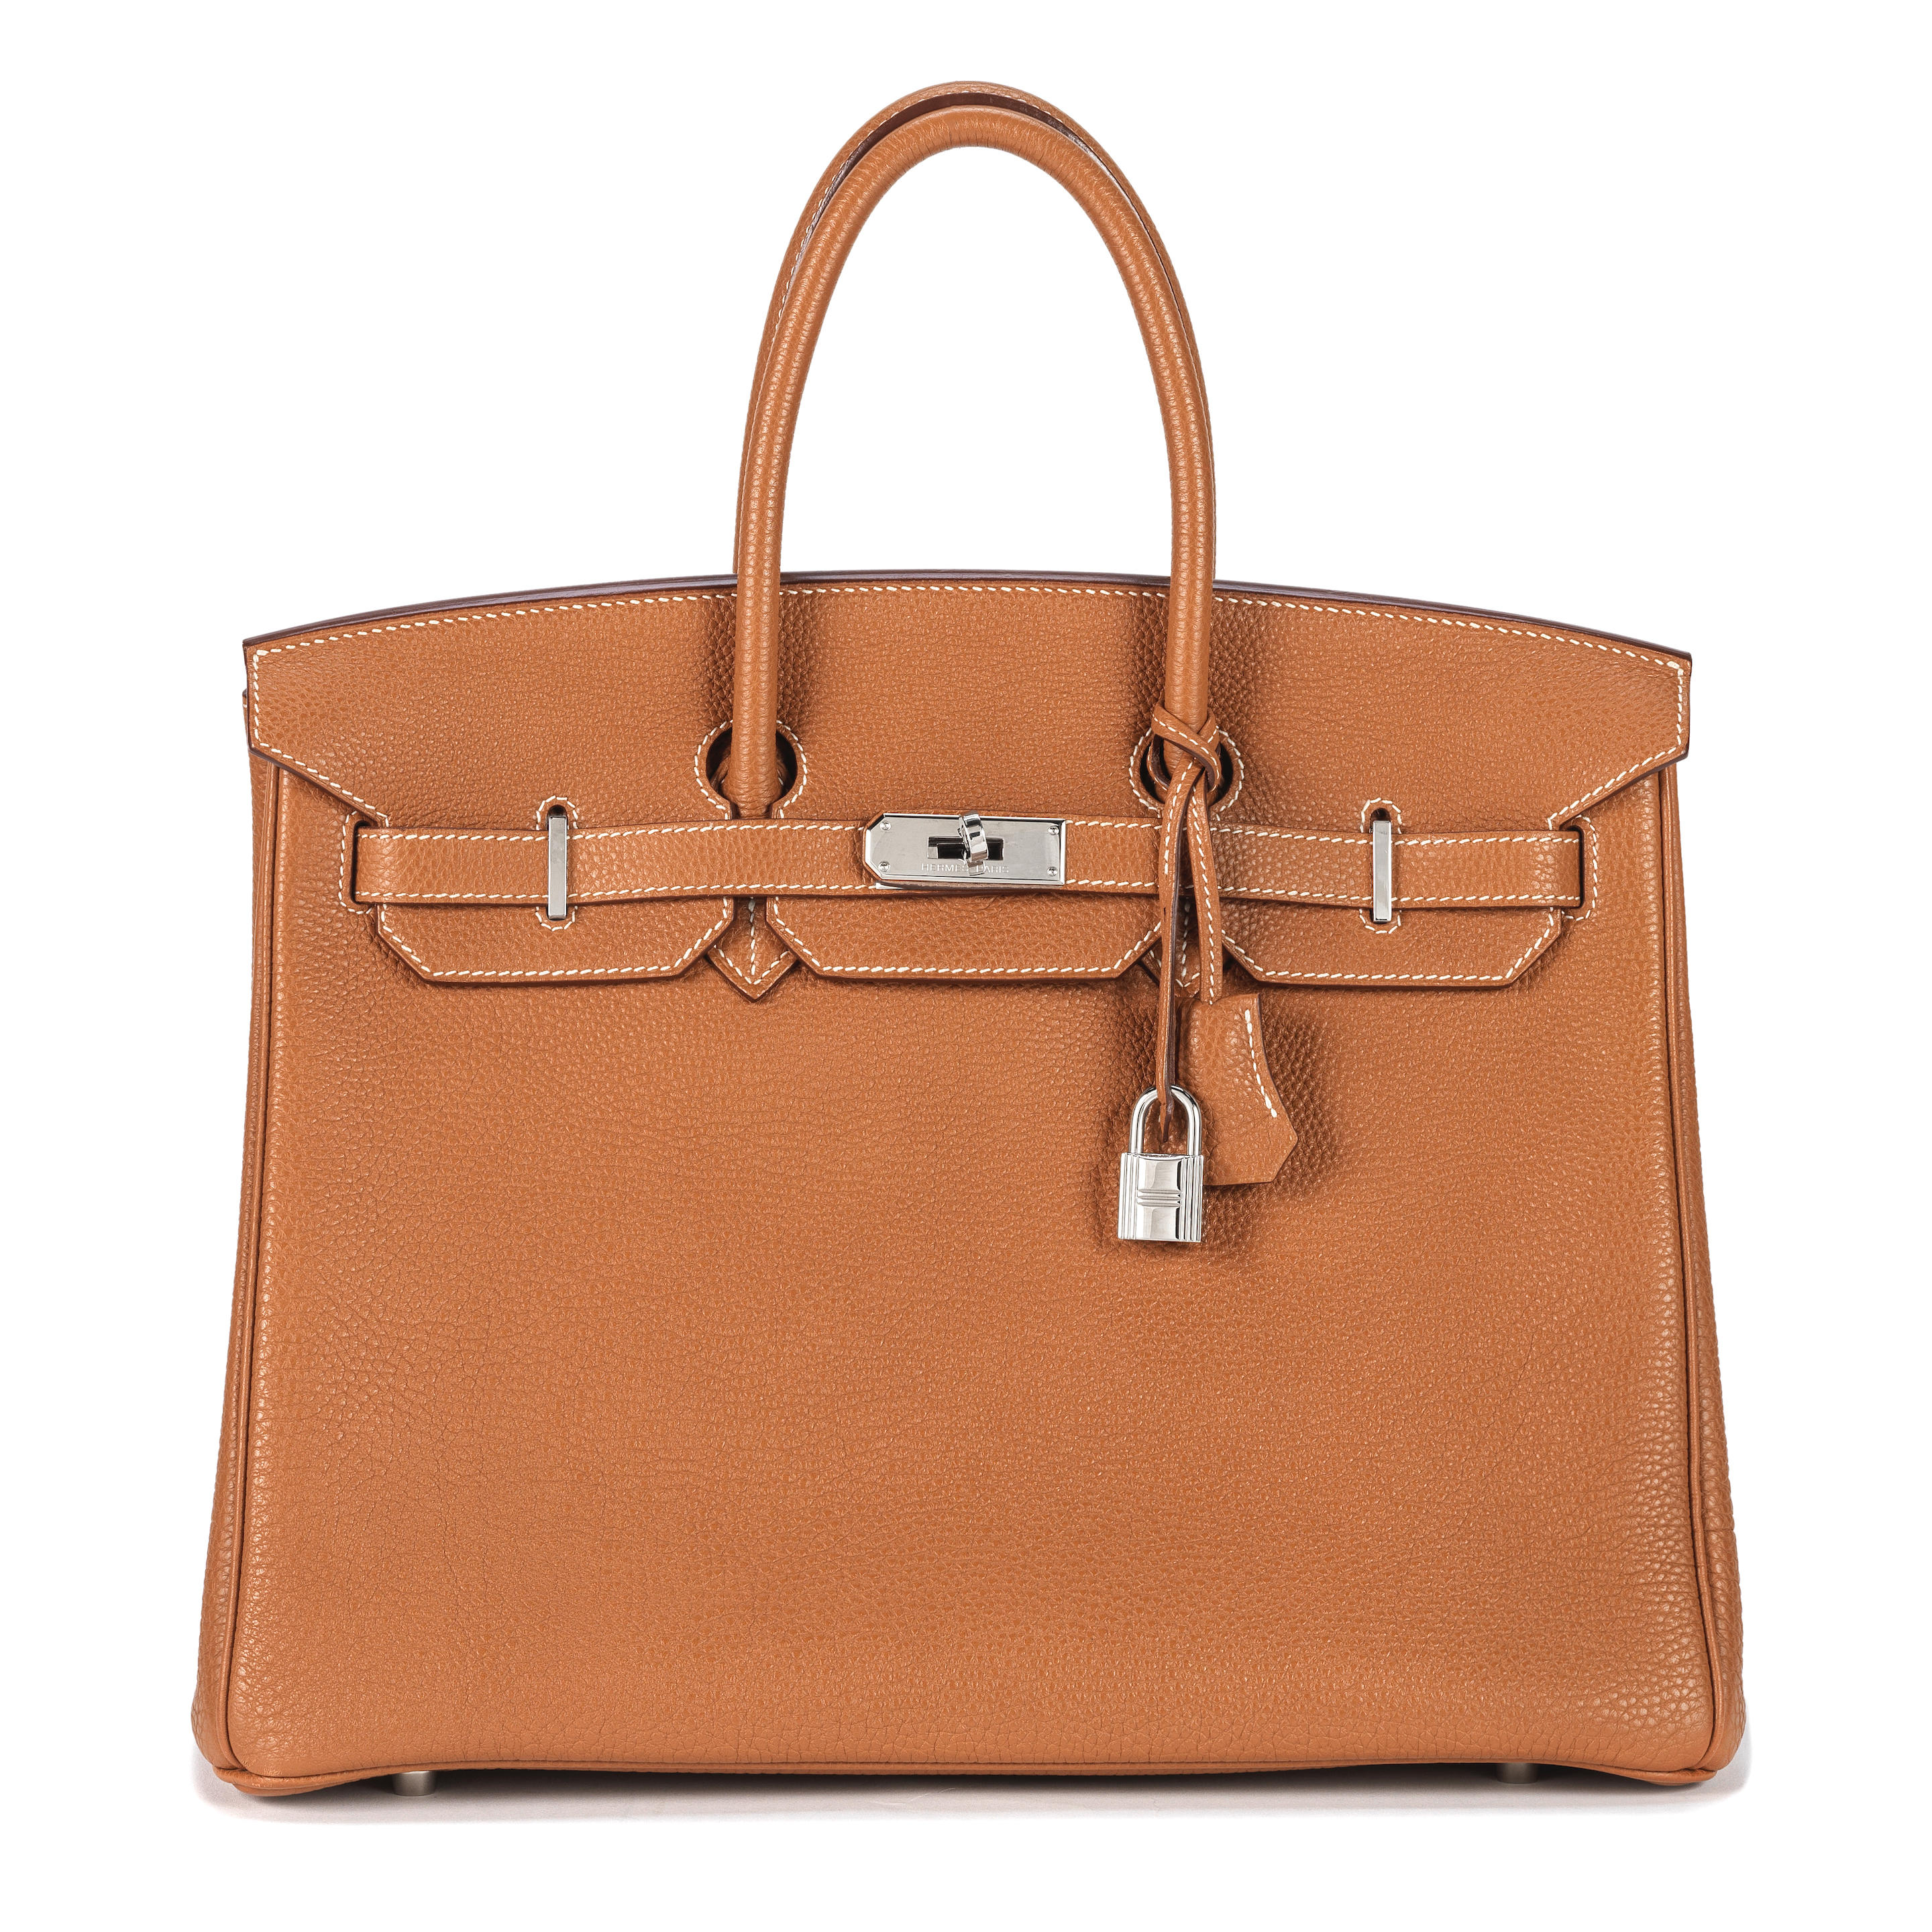 Sold at Auction: Louis Vuitton Monogram Babylone Tote Shoulder Bag